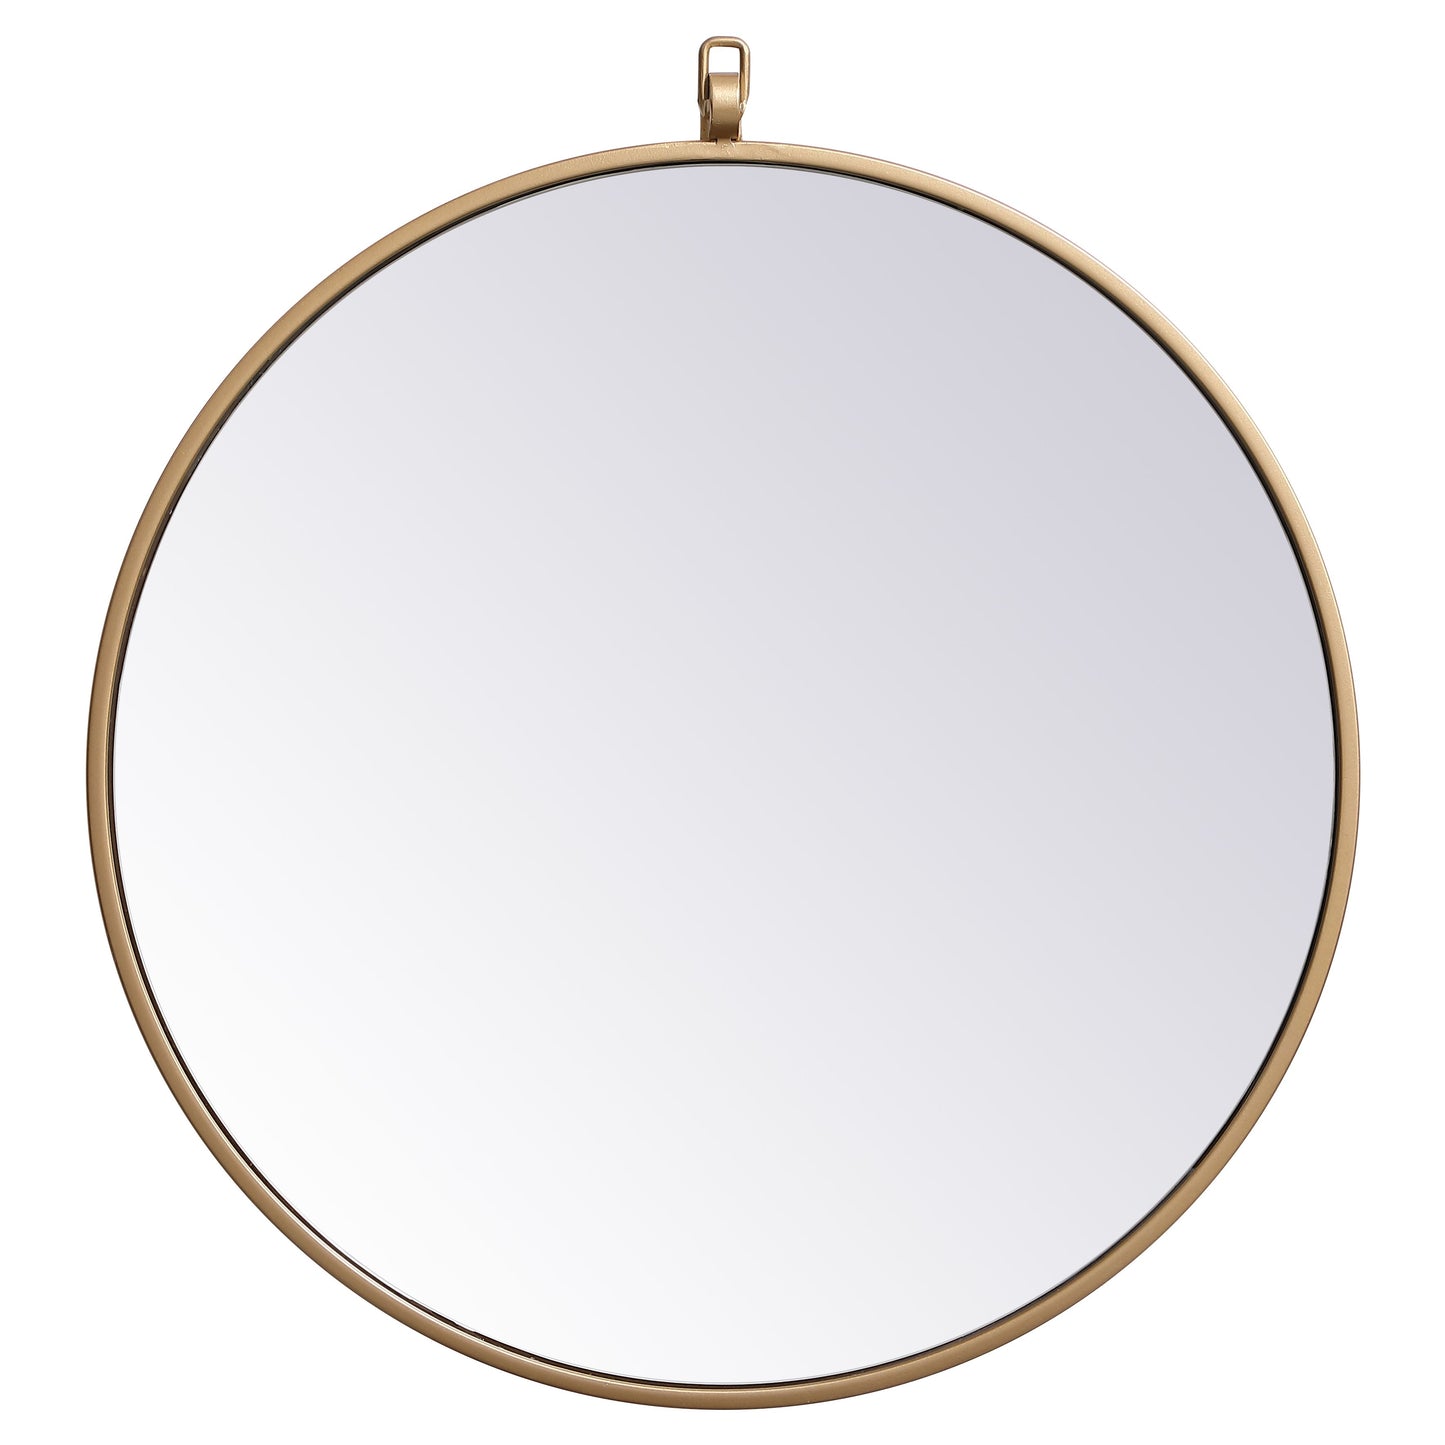 MR4721BR Rowan 21" x 21" Metal Framed Round Mirror with Decorative Hook in Brass